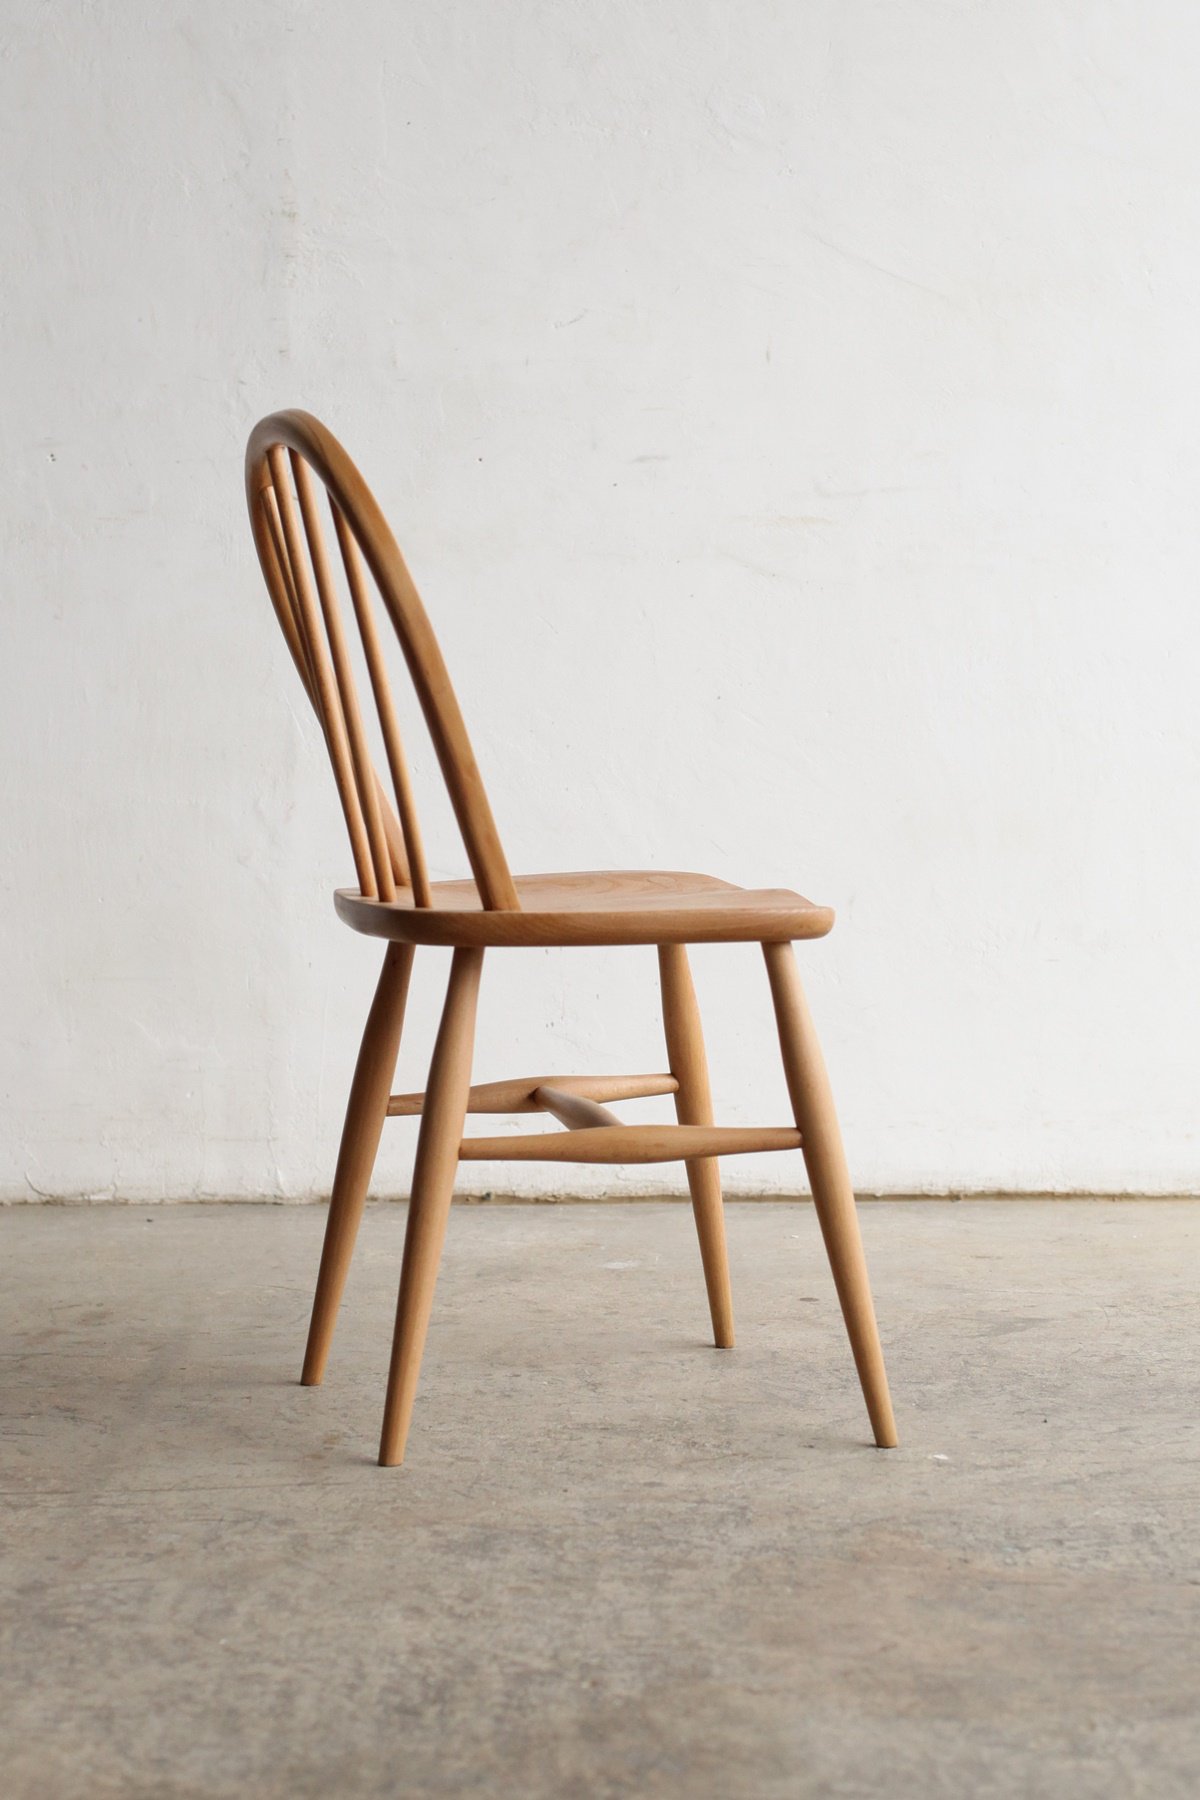 windsor chair[AY]